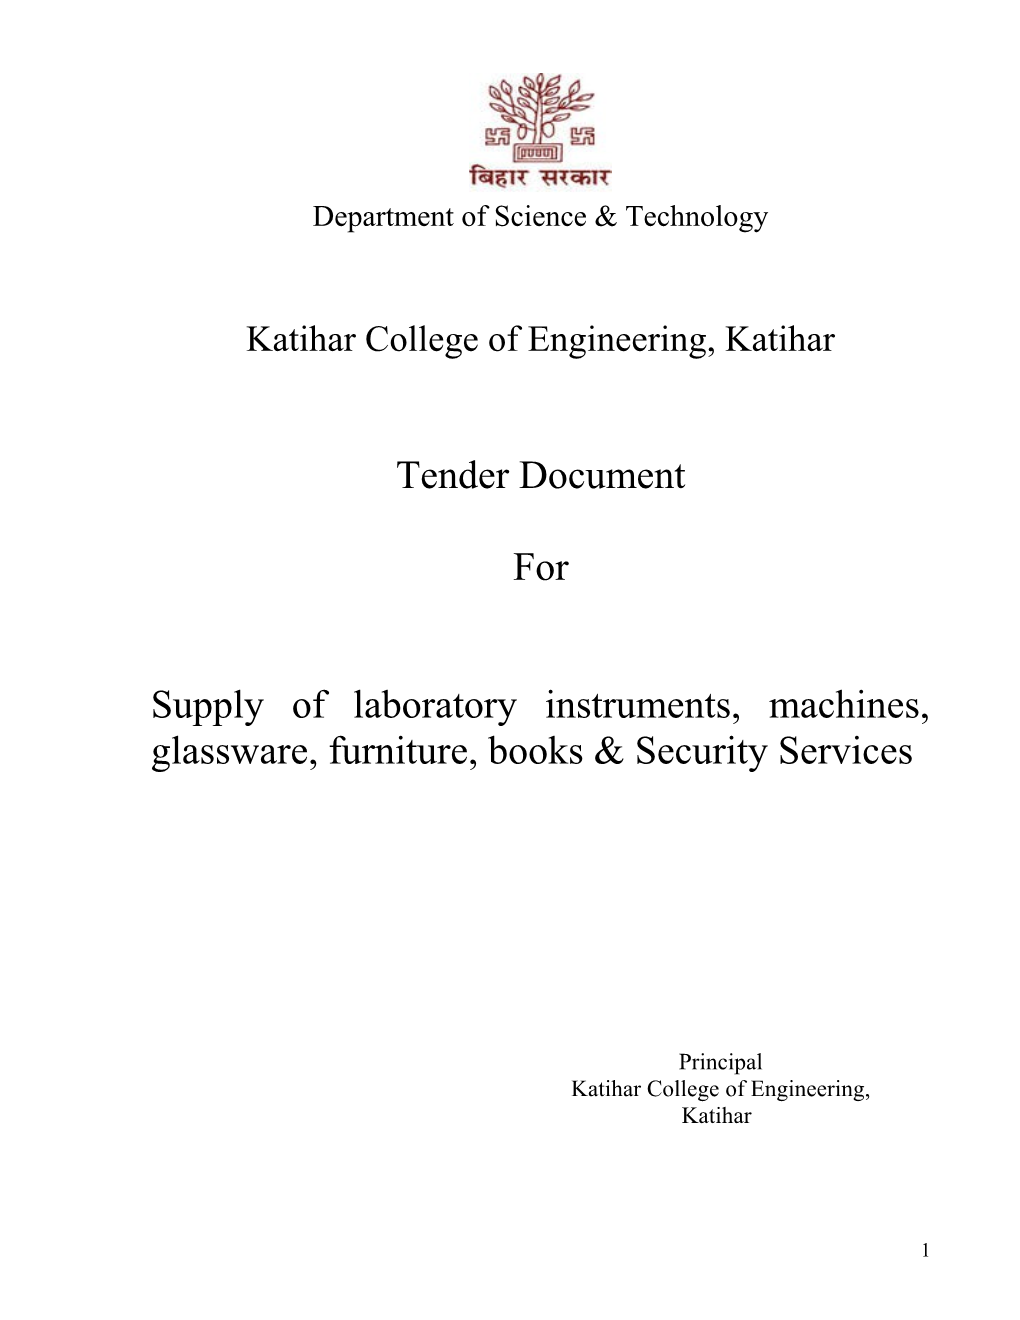 Katihar College of Engineering, Katihar